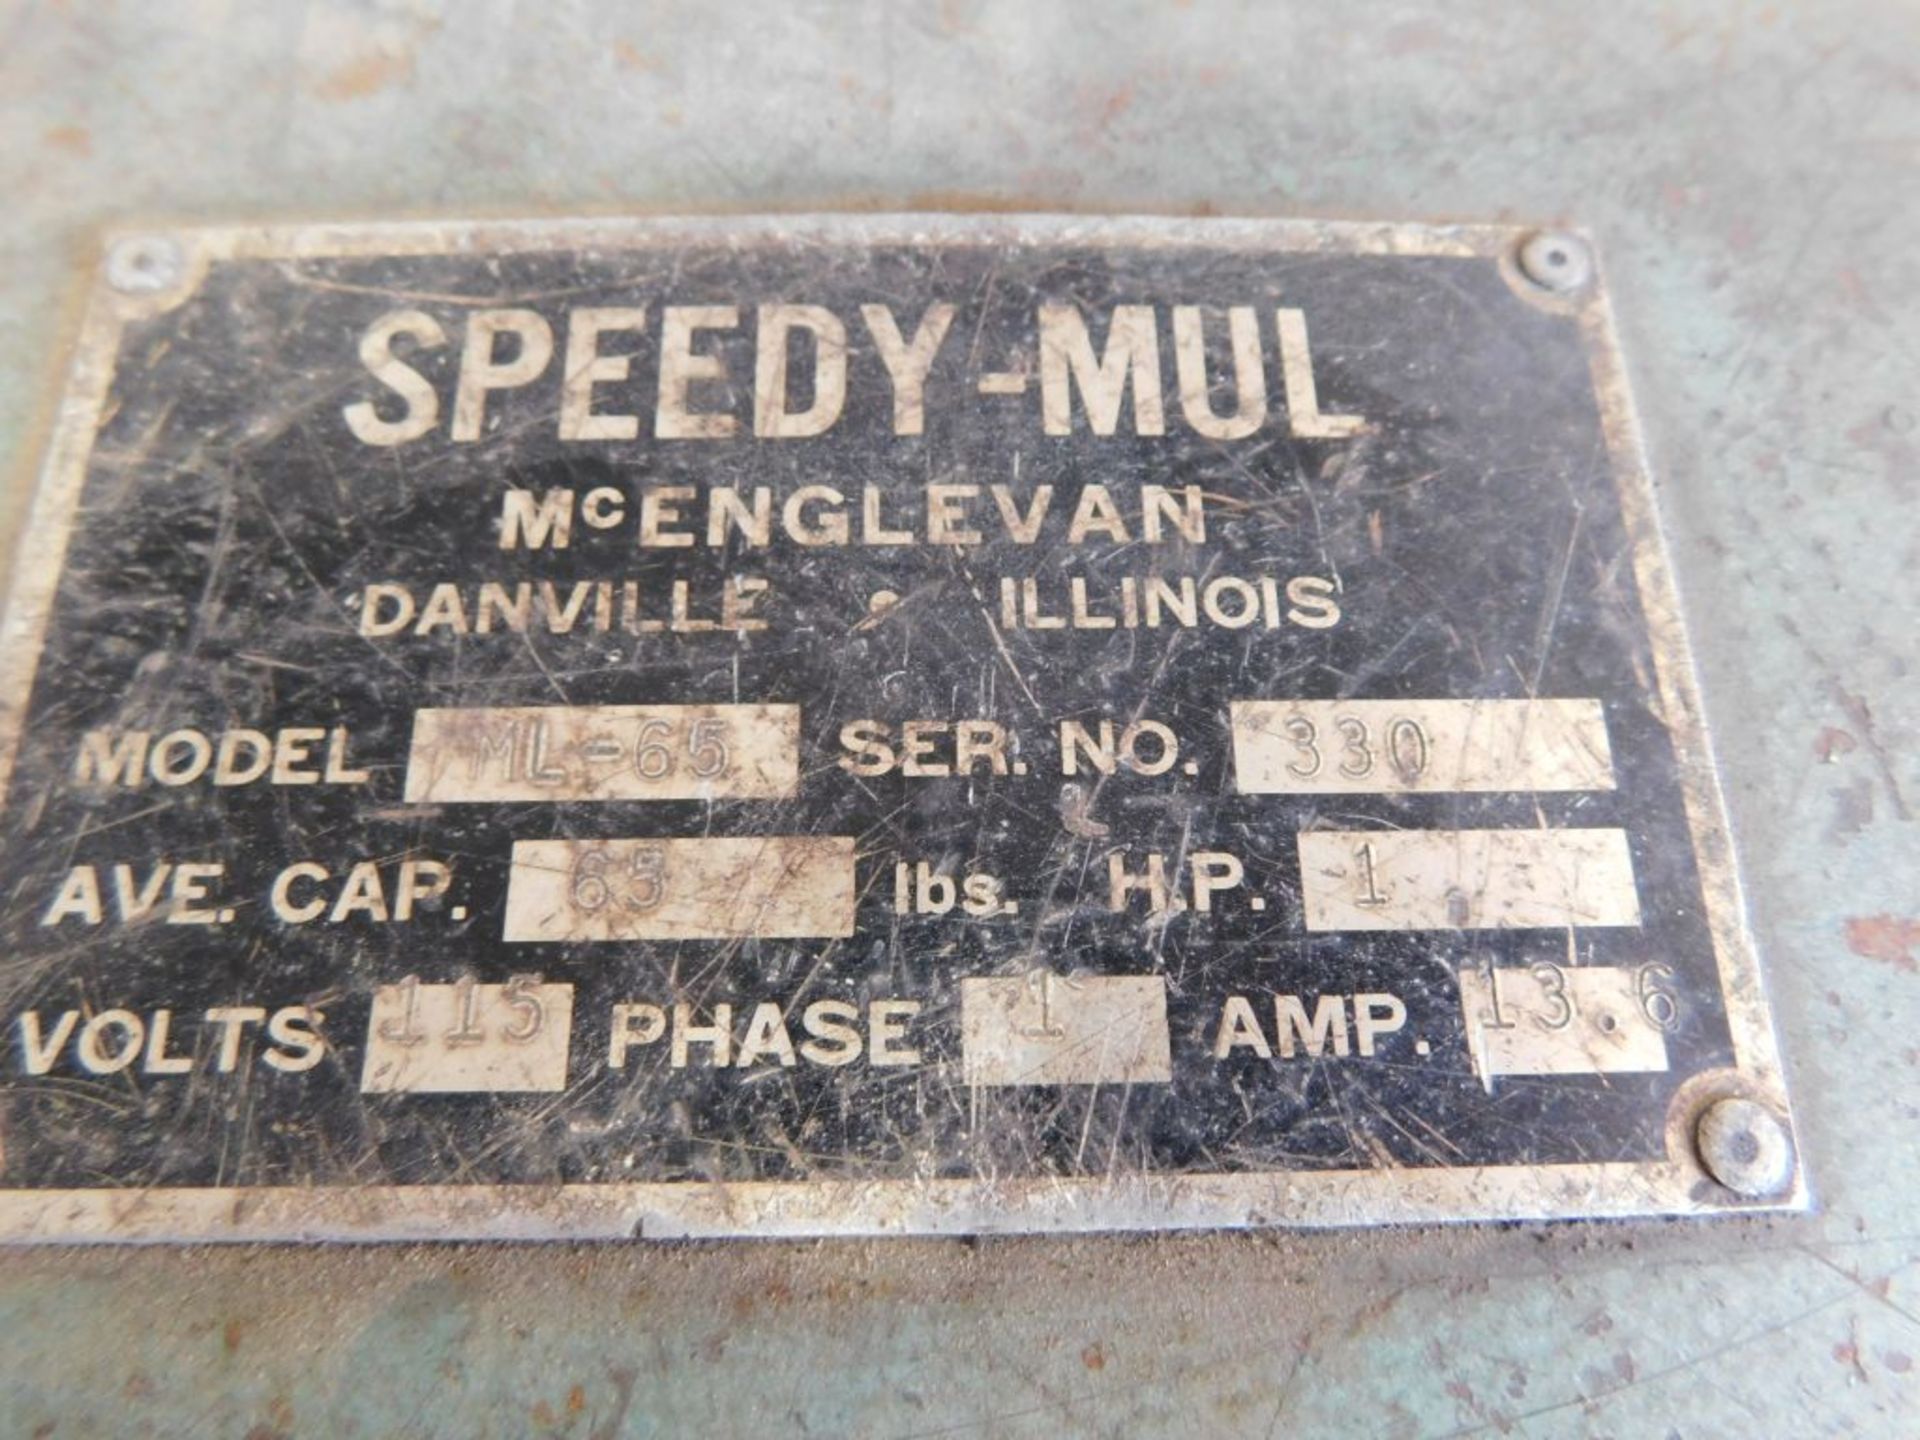 Thomas Speedy-Mull, model 50, 65 lb. capacity, 1 phase. - Image 2 of 3